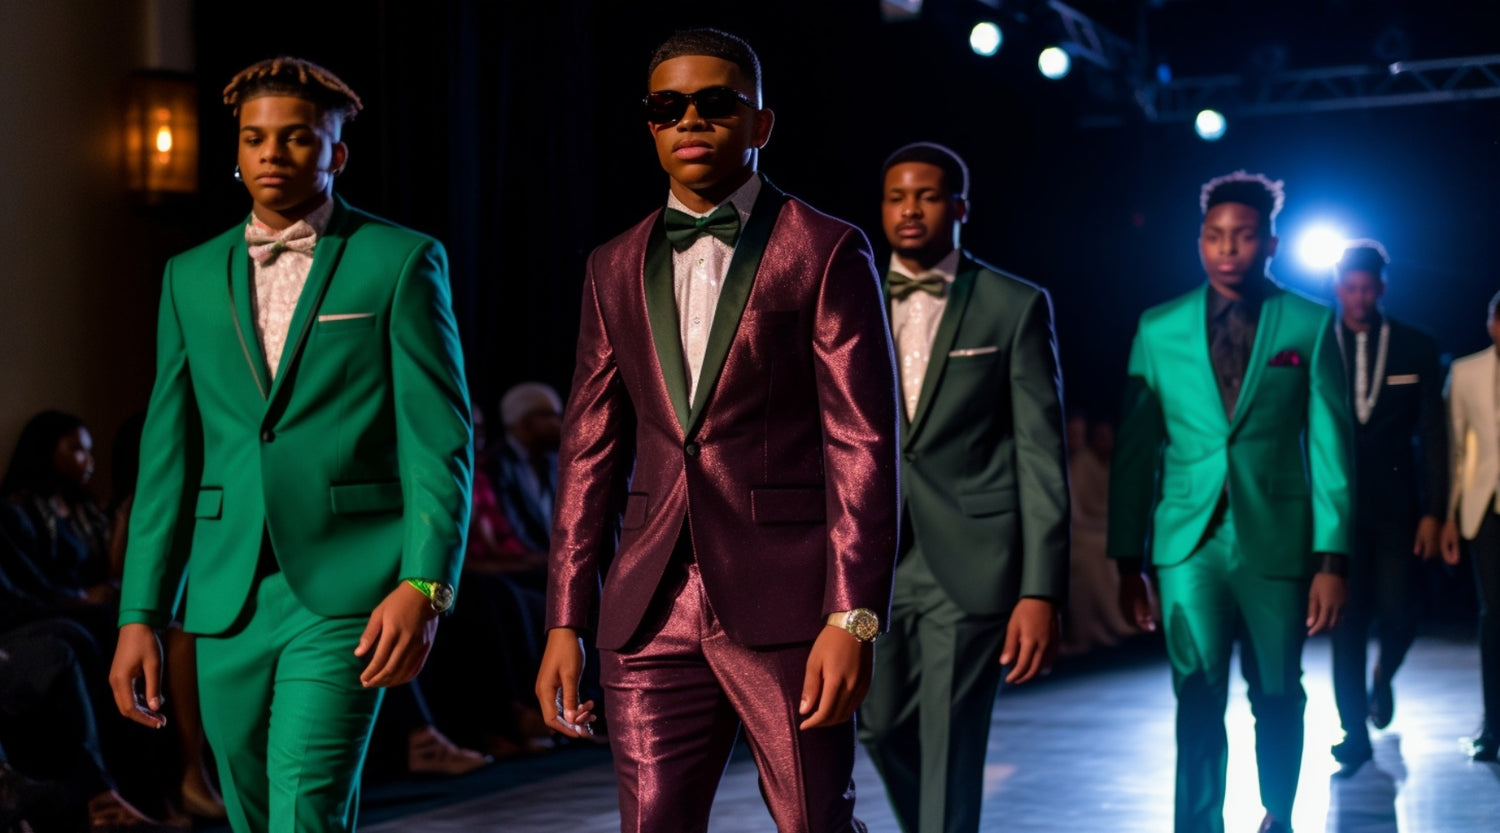 Men Prom Suits Set Slim Fit Fashion Black Mens Tux for Young Men School  Party : : Clothing, Shoes & Accessories